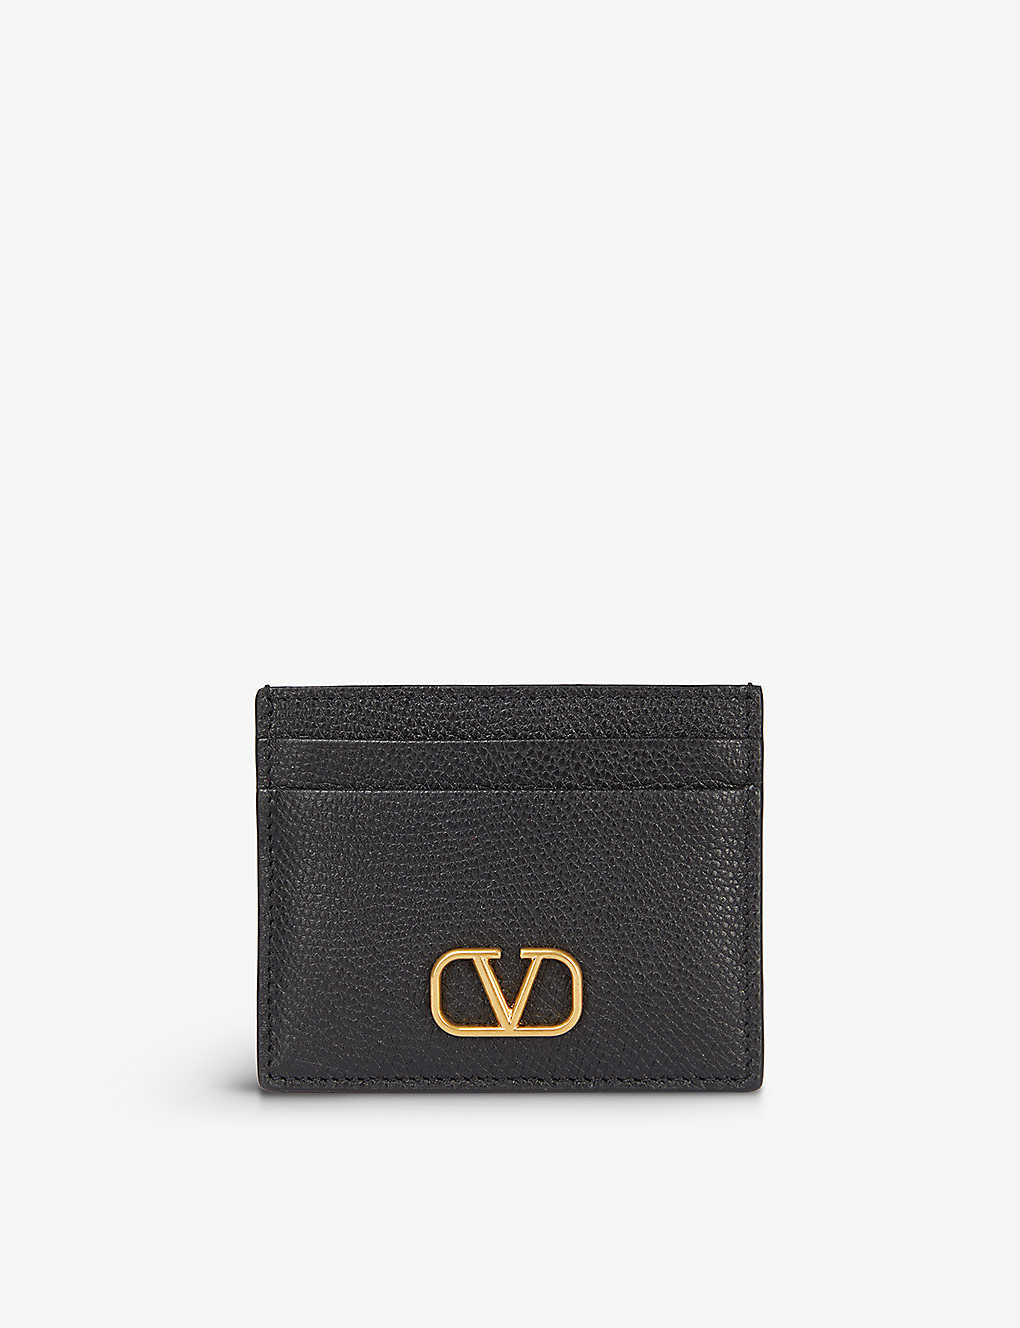 Valentino Garavani Black Vlogo Leather Card Holder